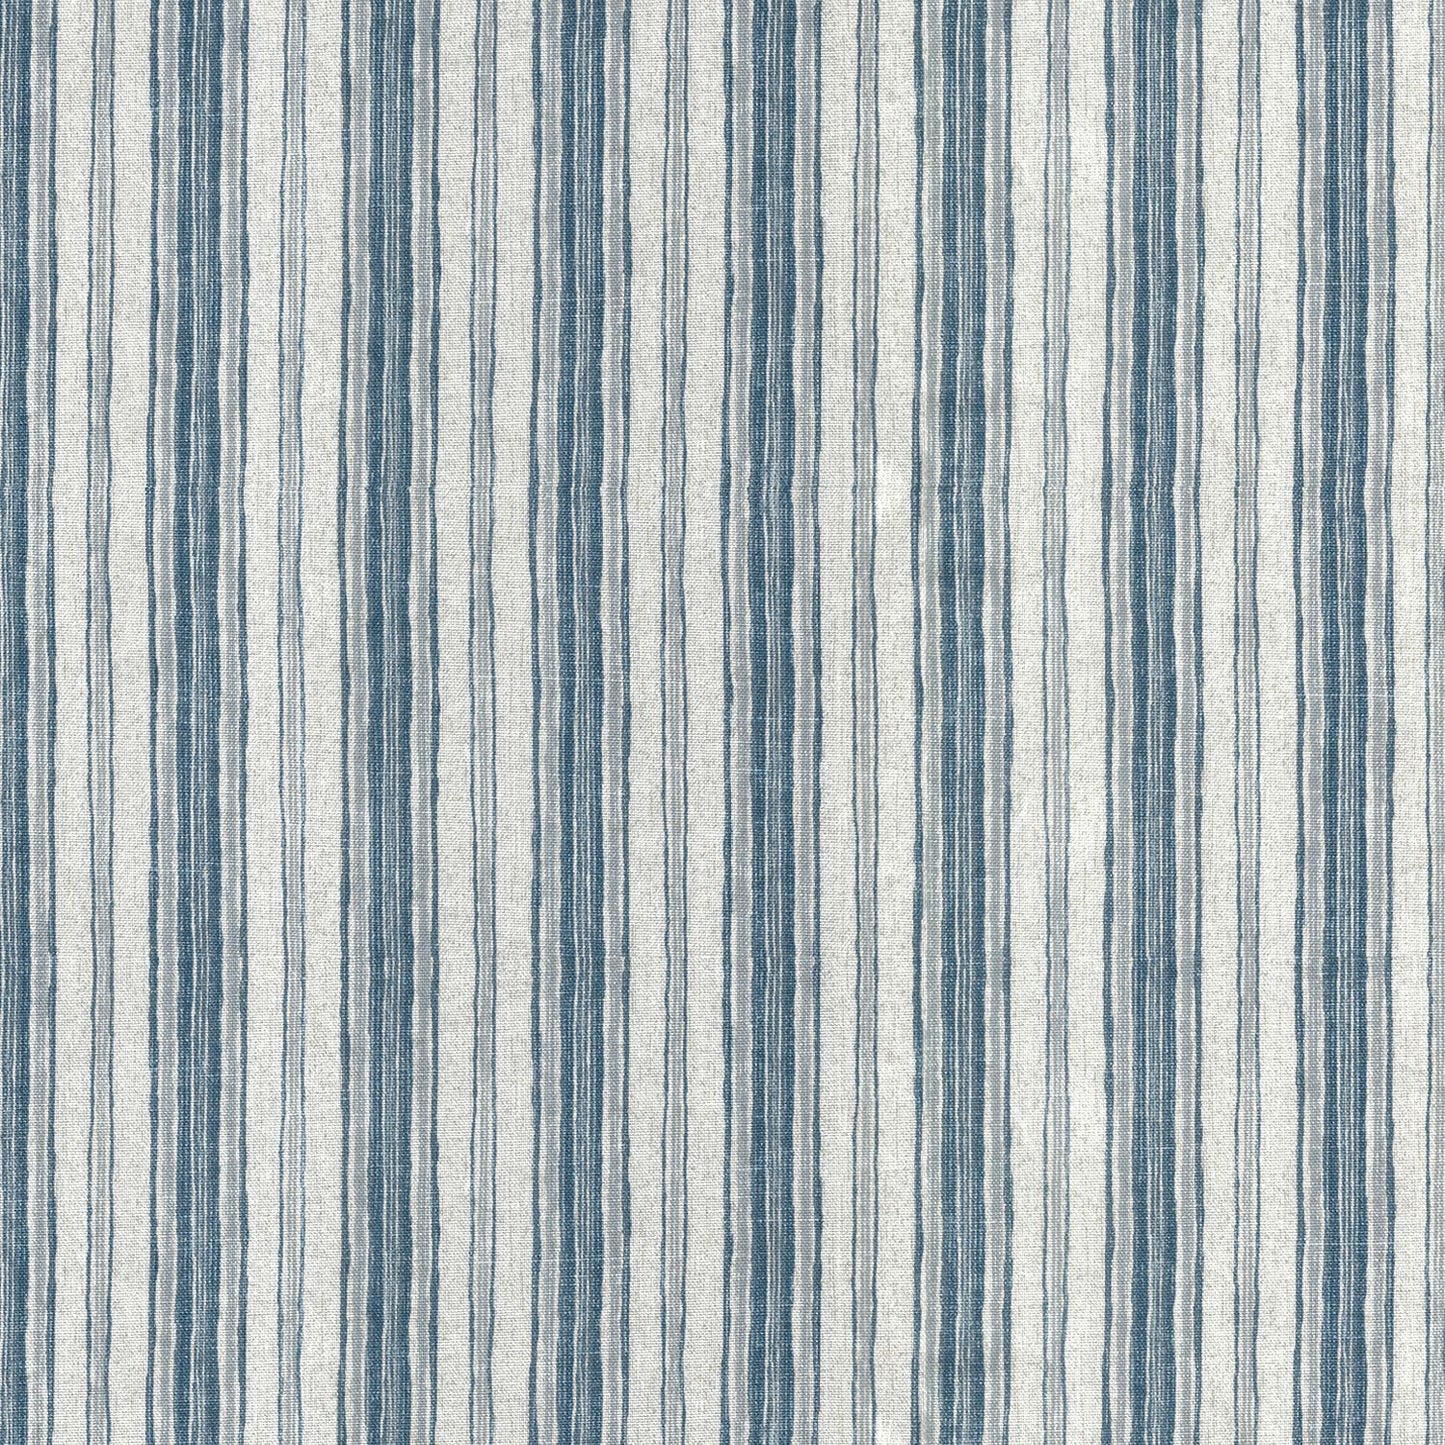 tailored crib skirt in brunswick denim blue stripe